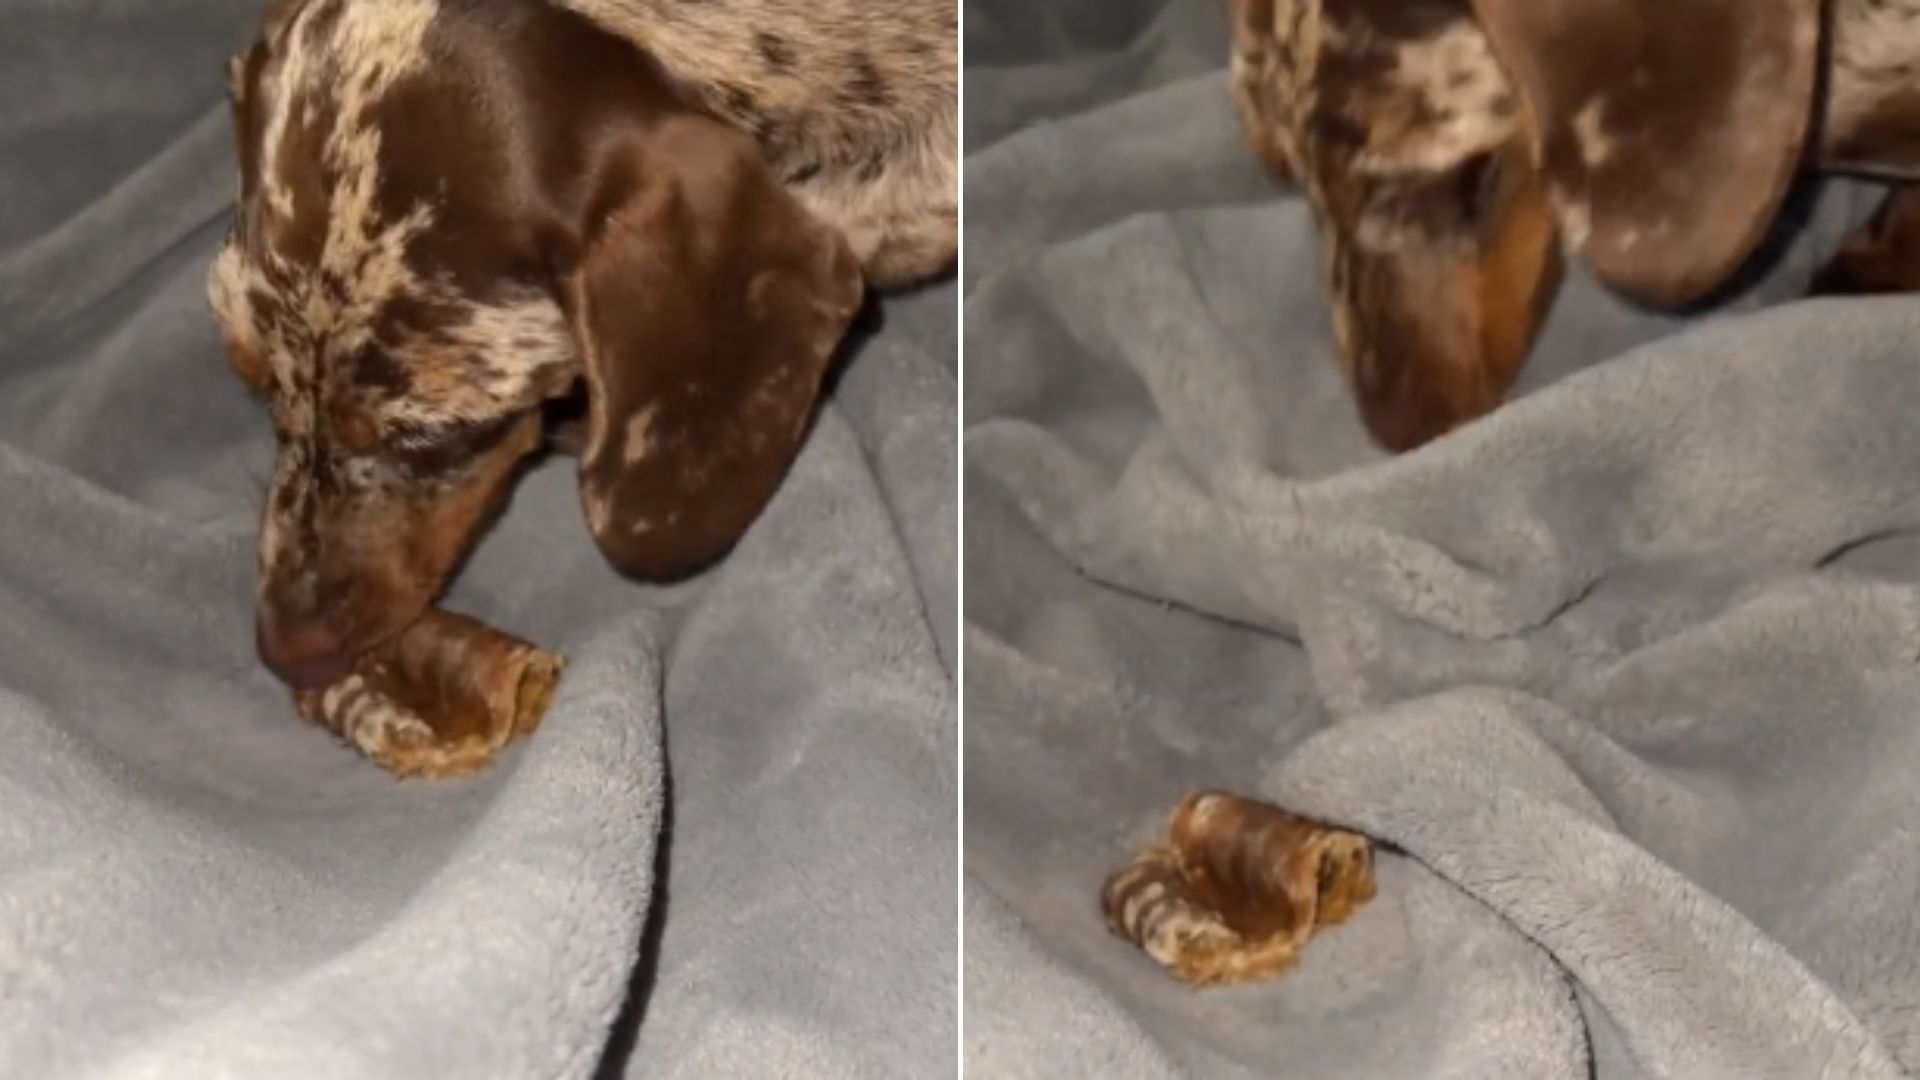 dog hiding treats under blanket